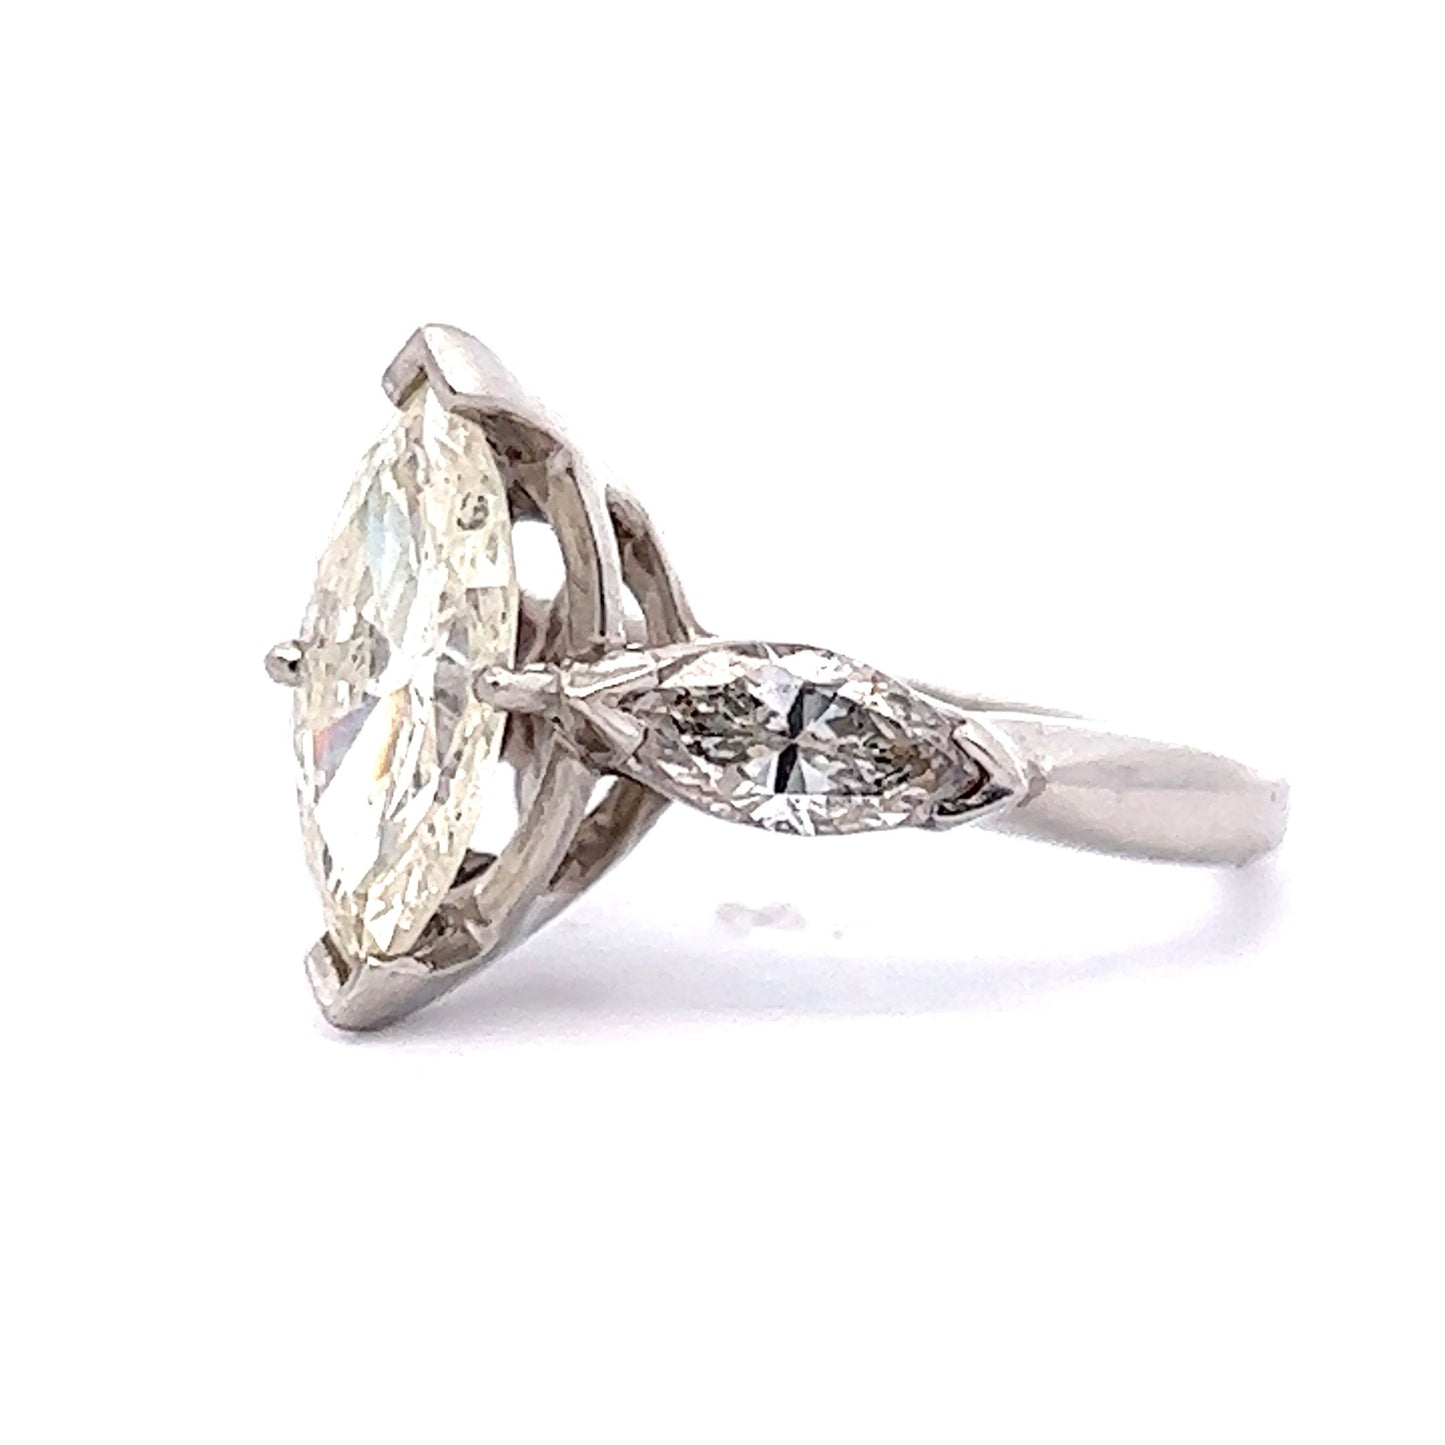 1.60 Three Stone Marquise Diamond Engagement Ring in Platinum